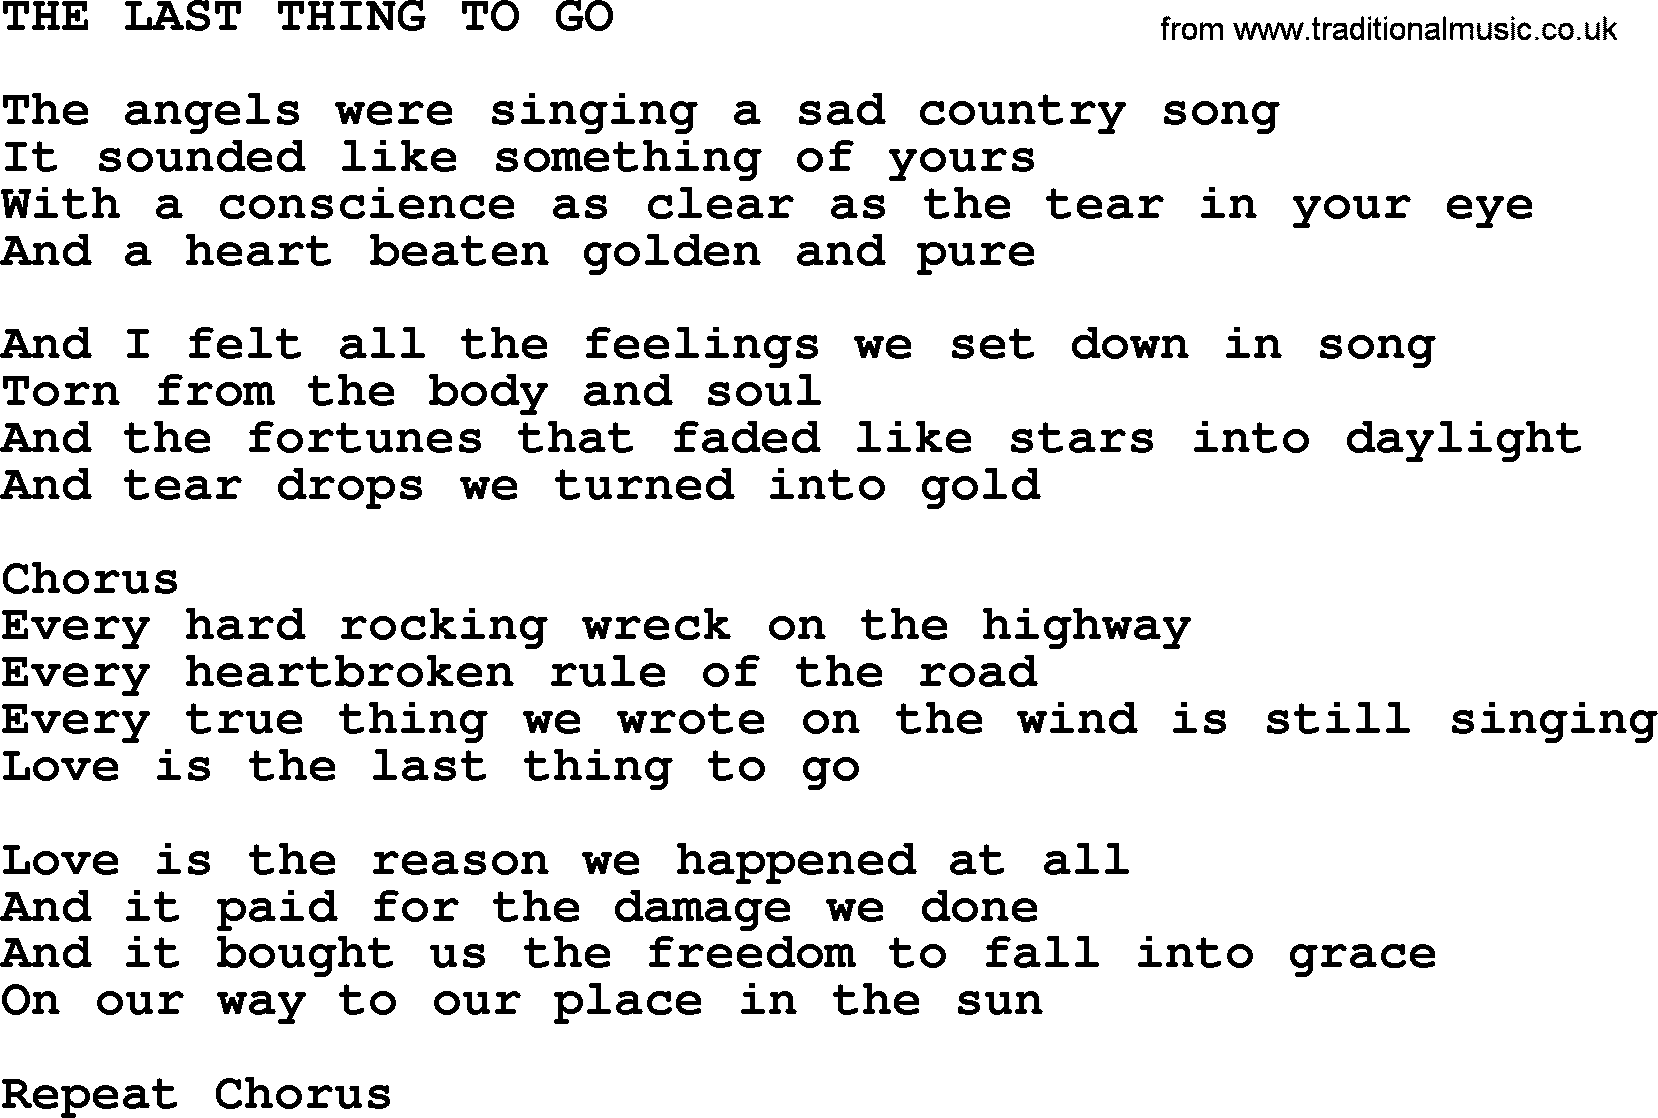 Kris Kristofferson song: The Last Thing To Go lyrics